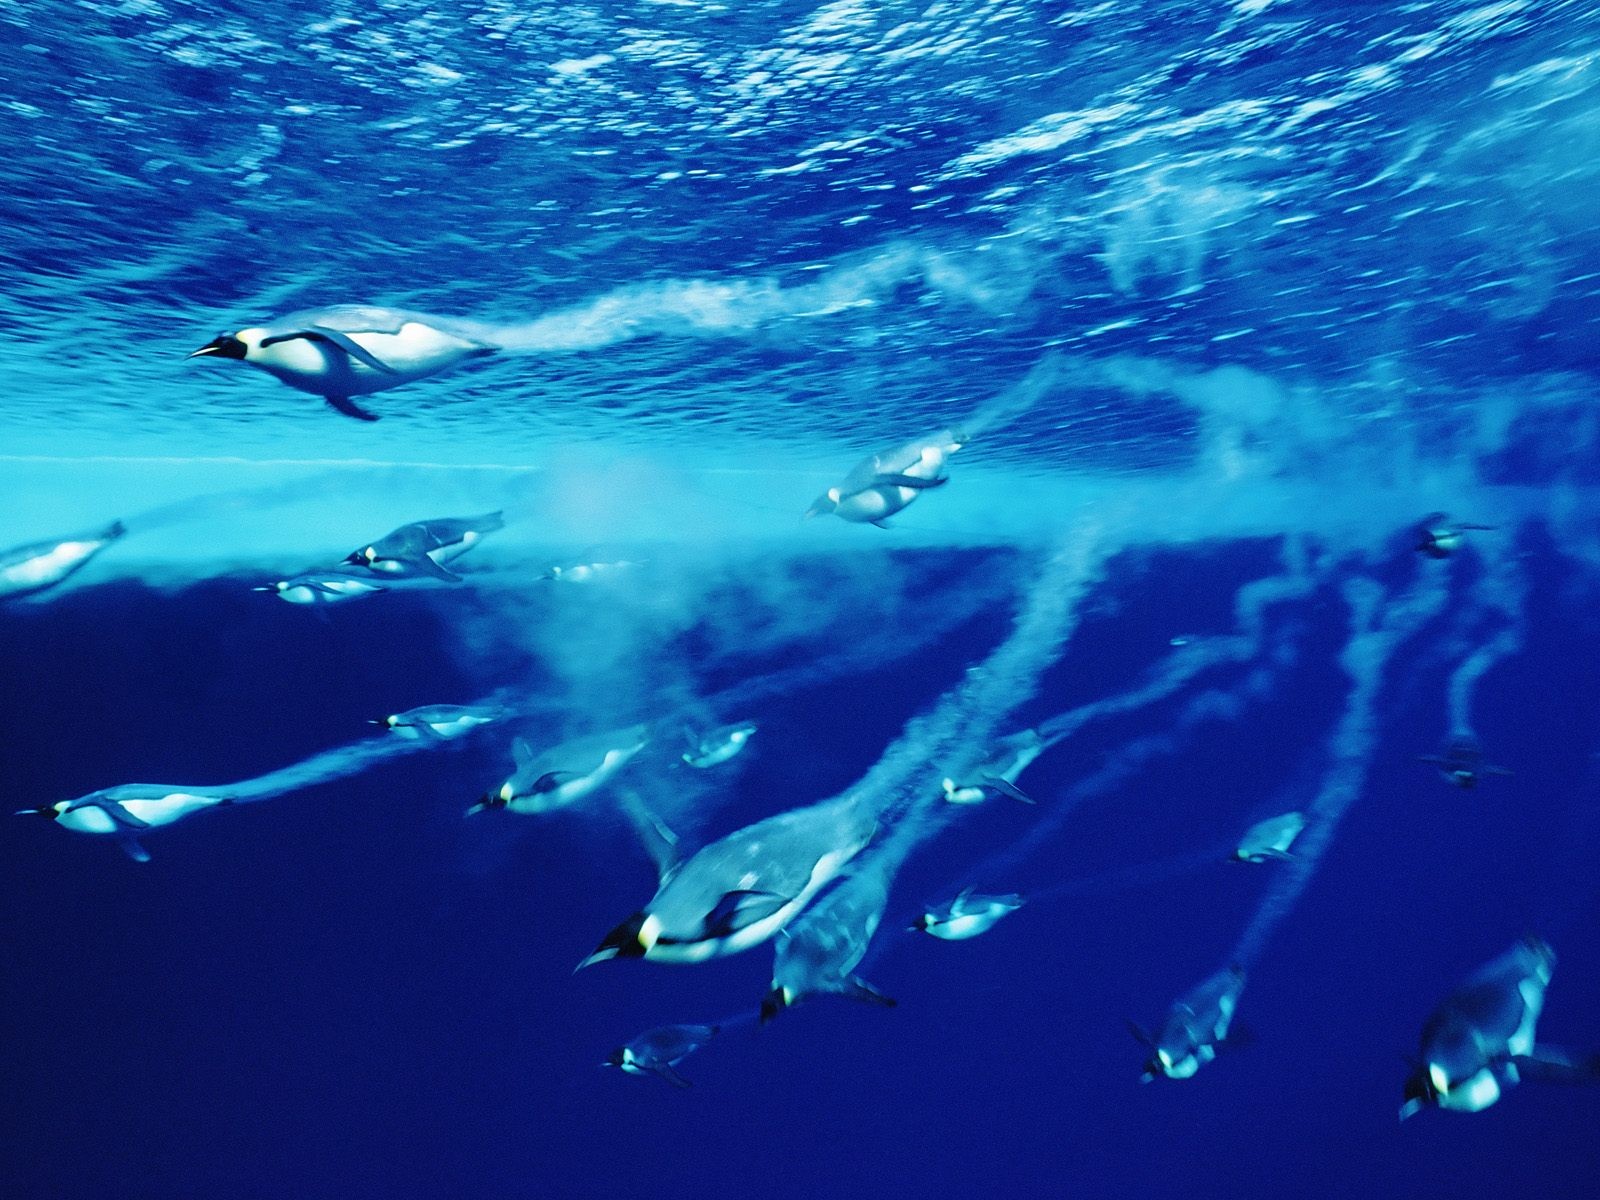 http://3.bp.blogspot.com/-3U1DLKYxlnY/T40HhPA07kI/AAAAAAAABgc/IiM3XrXB3c8/s1600/penguins-swimming-sea-full-hd-wallpaper.jpg